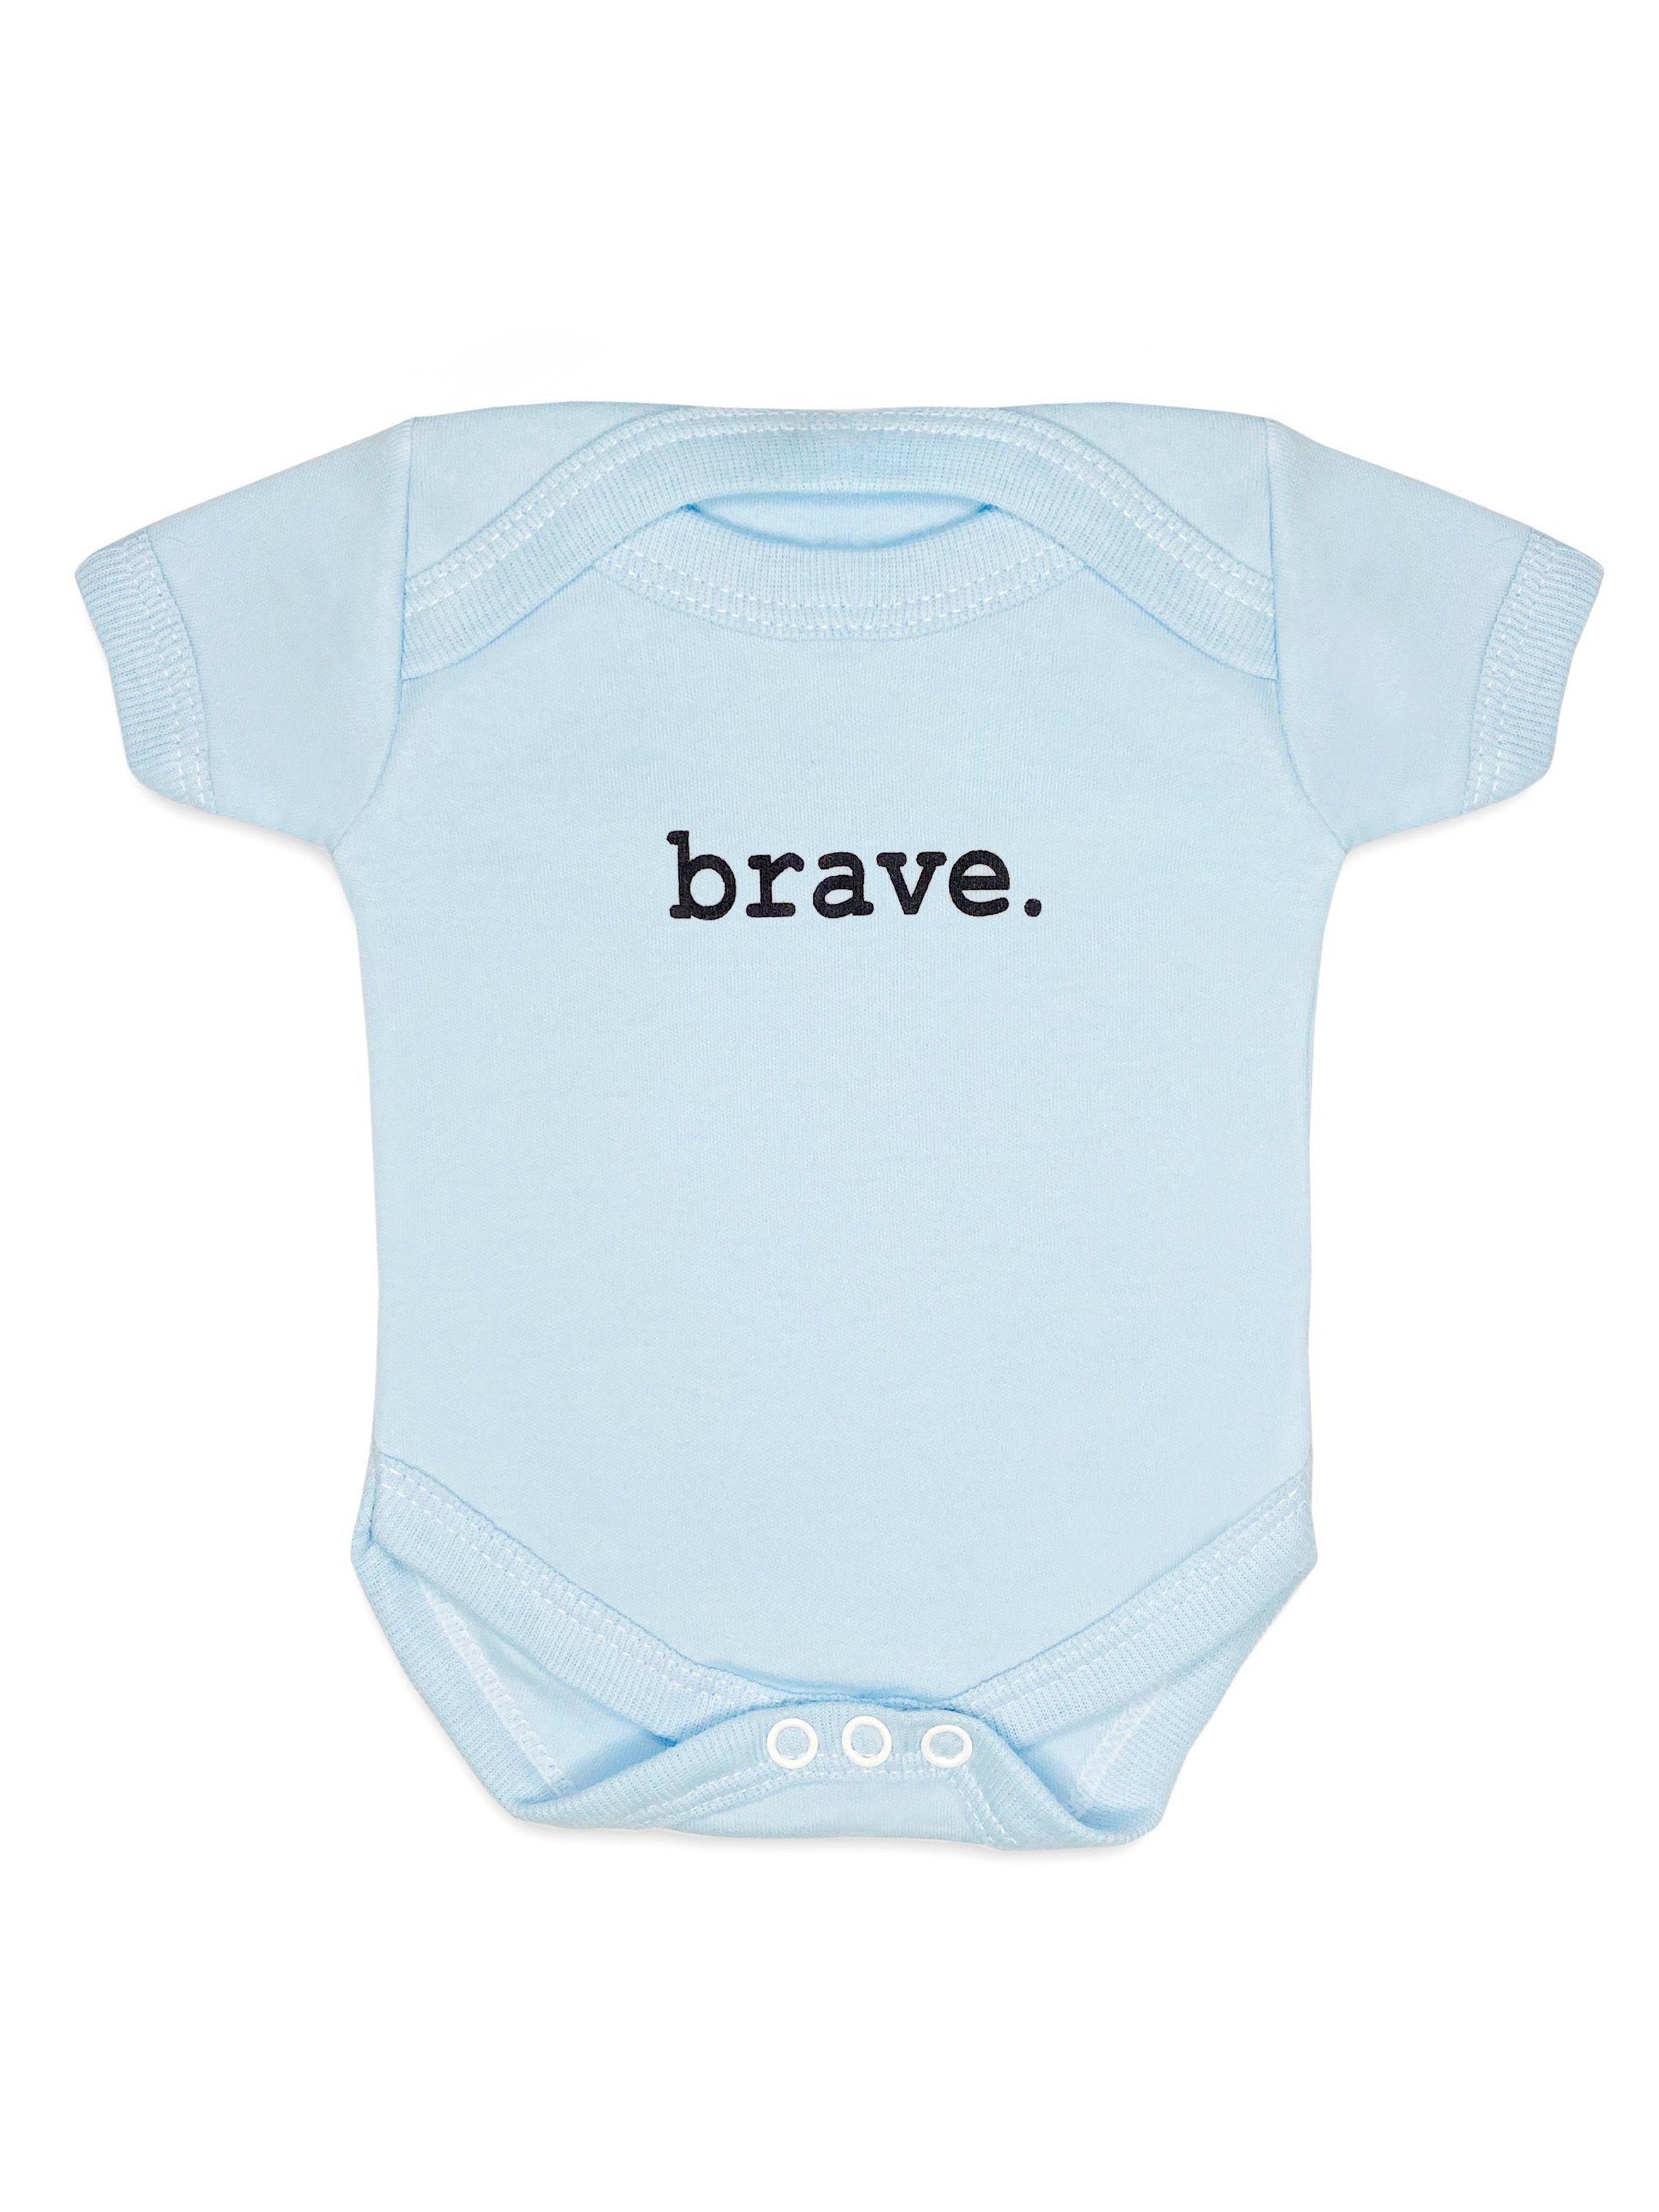 "Brave" Bodysuit - Blue - Bodysuit / Vest - Little Mouse Baby Clothing & Gifts